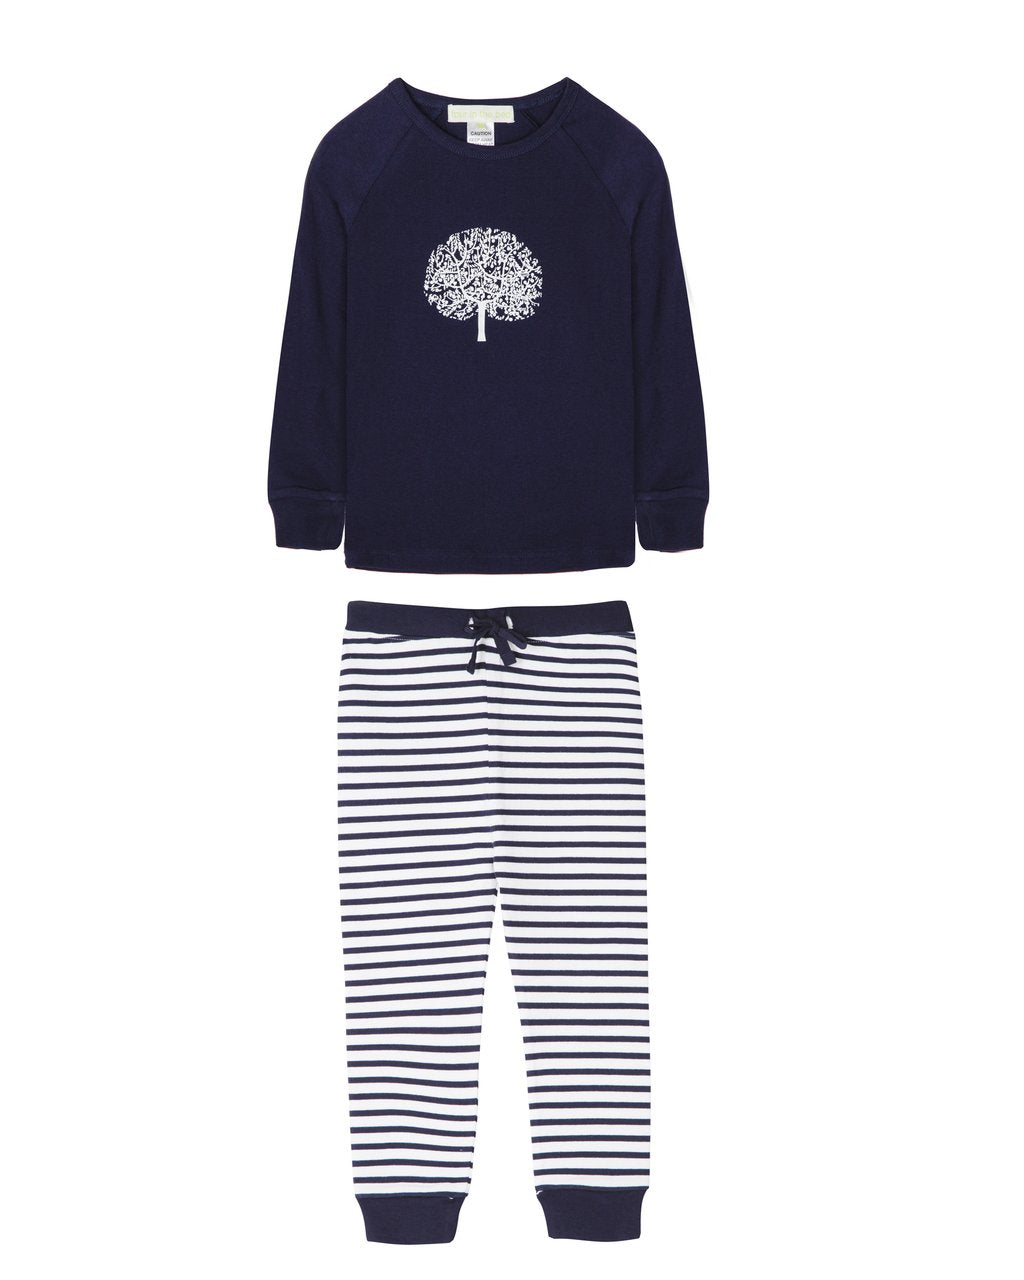 Girls 100% jersey cotton winter pyjamas - Navy apple tree